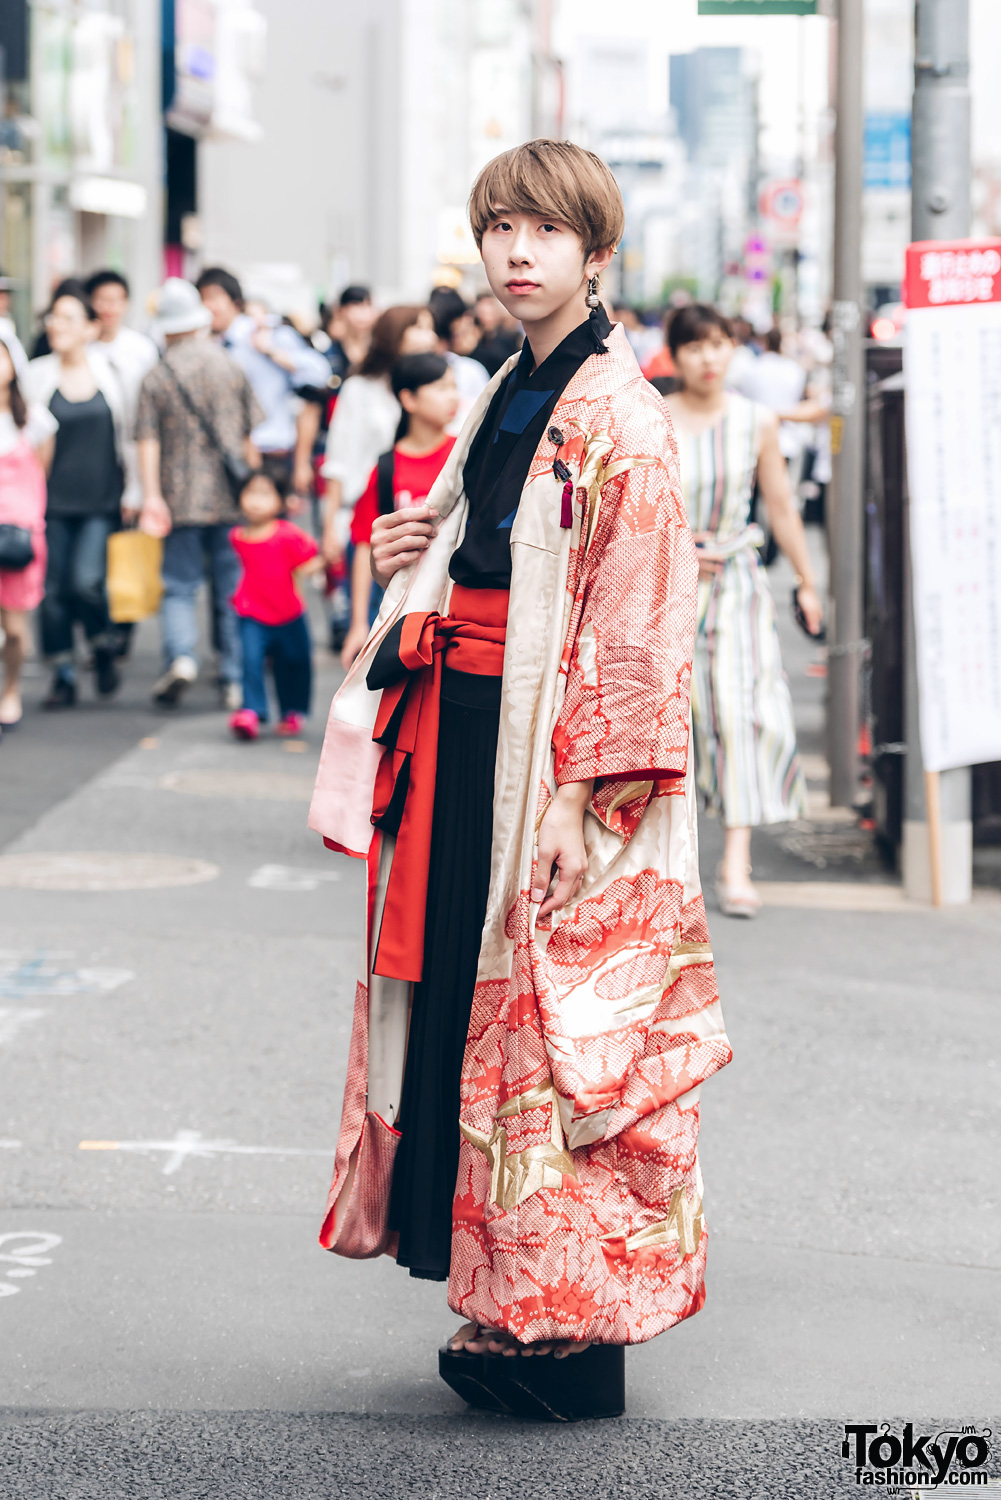 Harajuku Guy in Kimono Street Street Style w/ Okobo Geta Sandals & Gucci Handbag